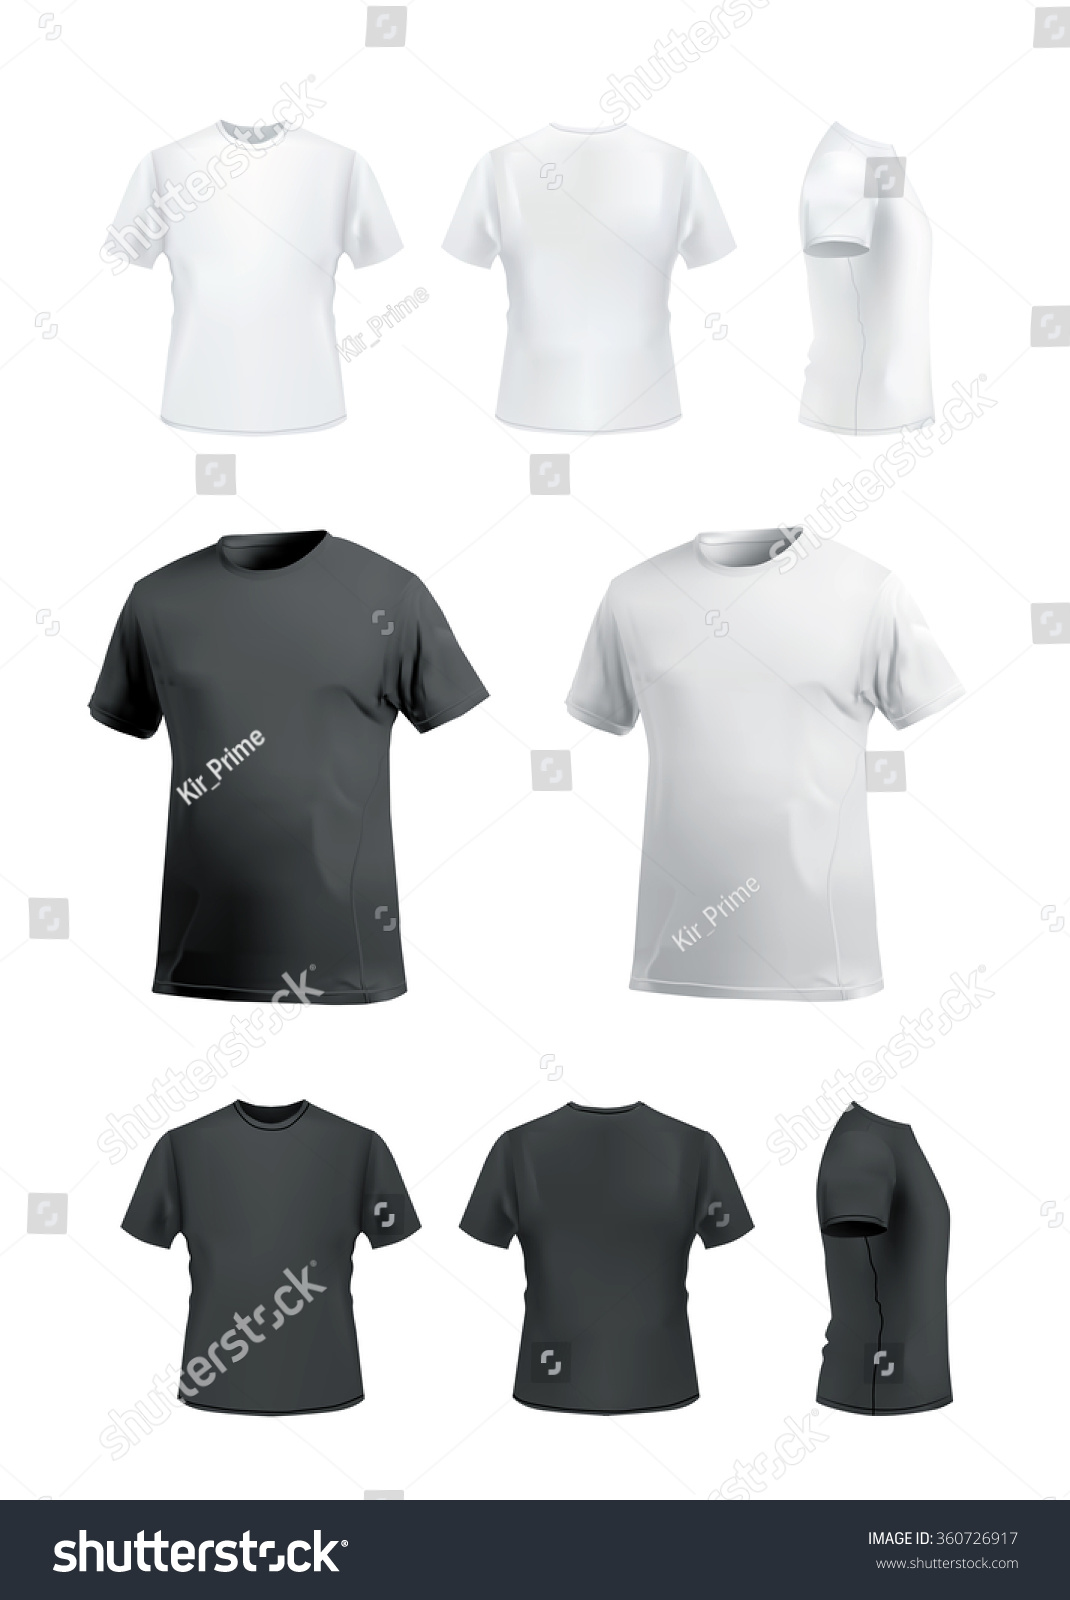 Download Tshirt Mockup Set On White Background Stock Vector 360726917 - Shutterstock